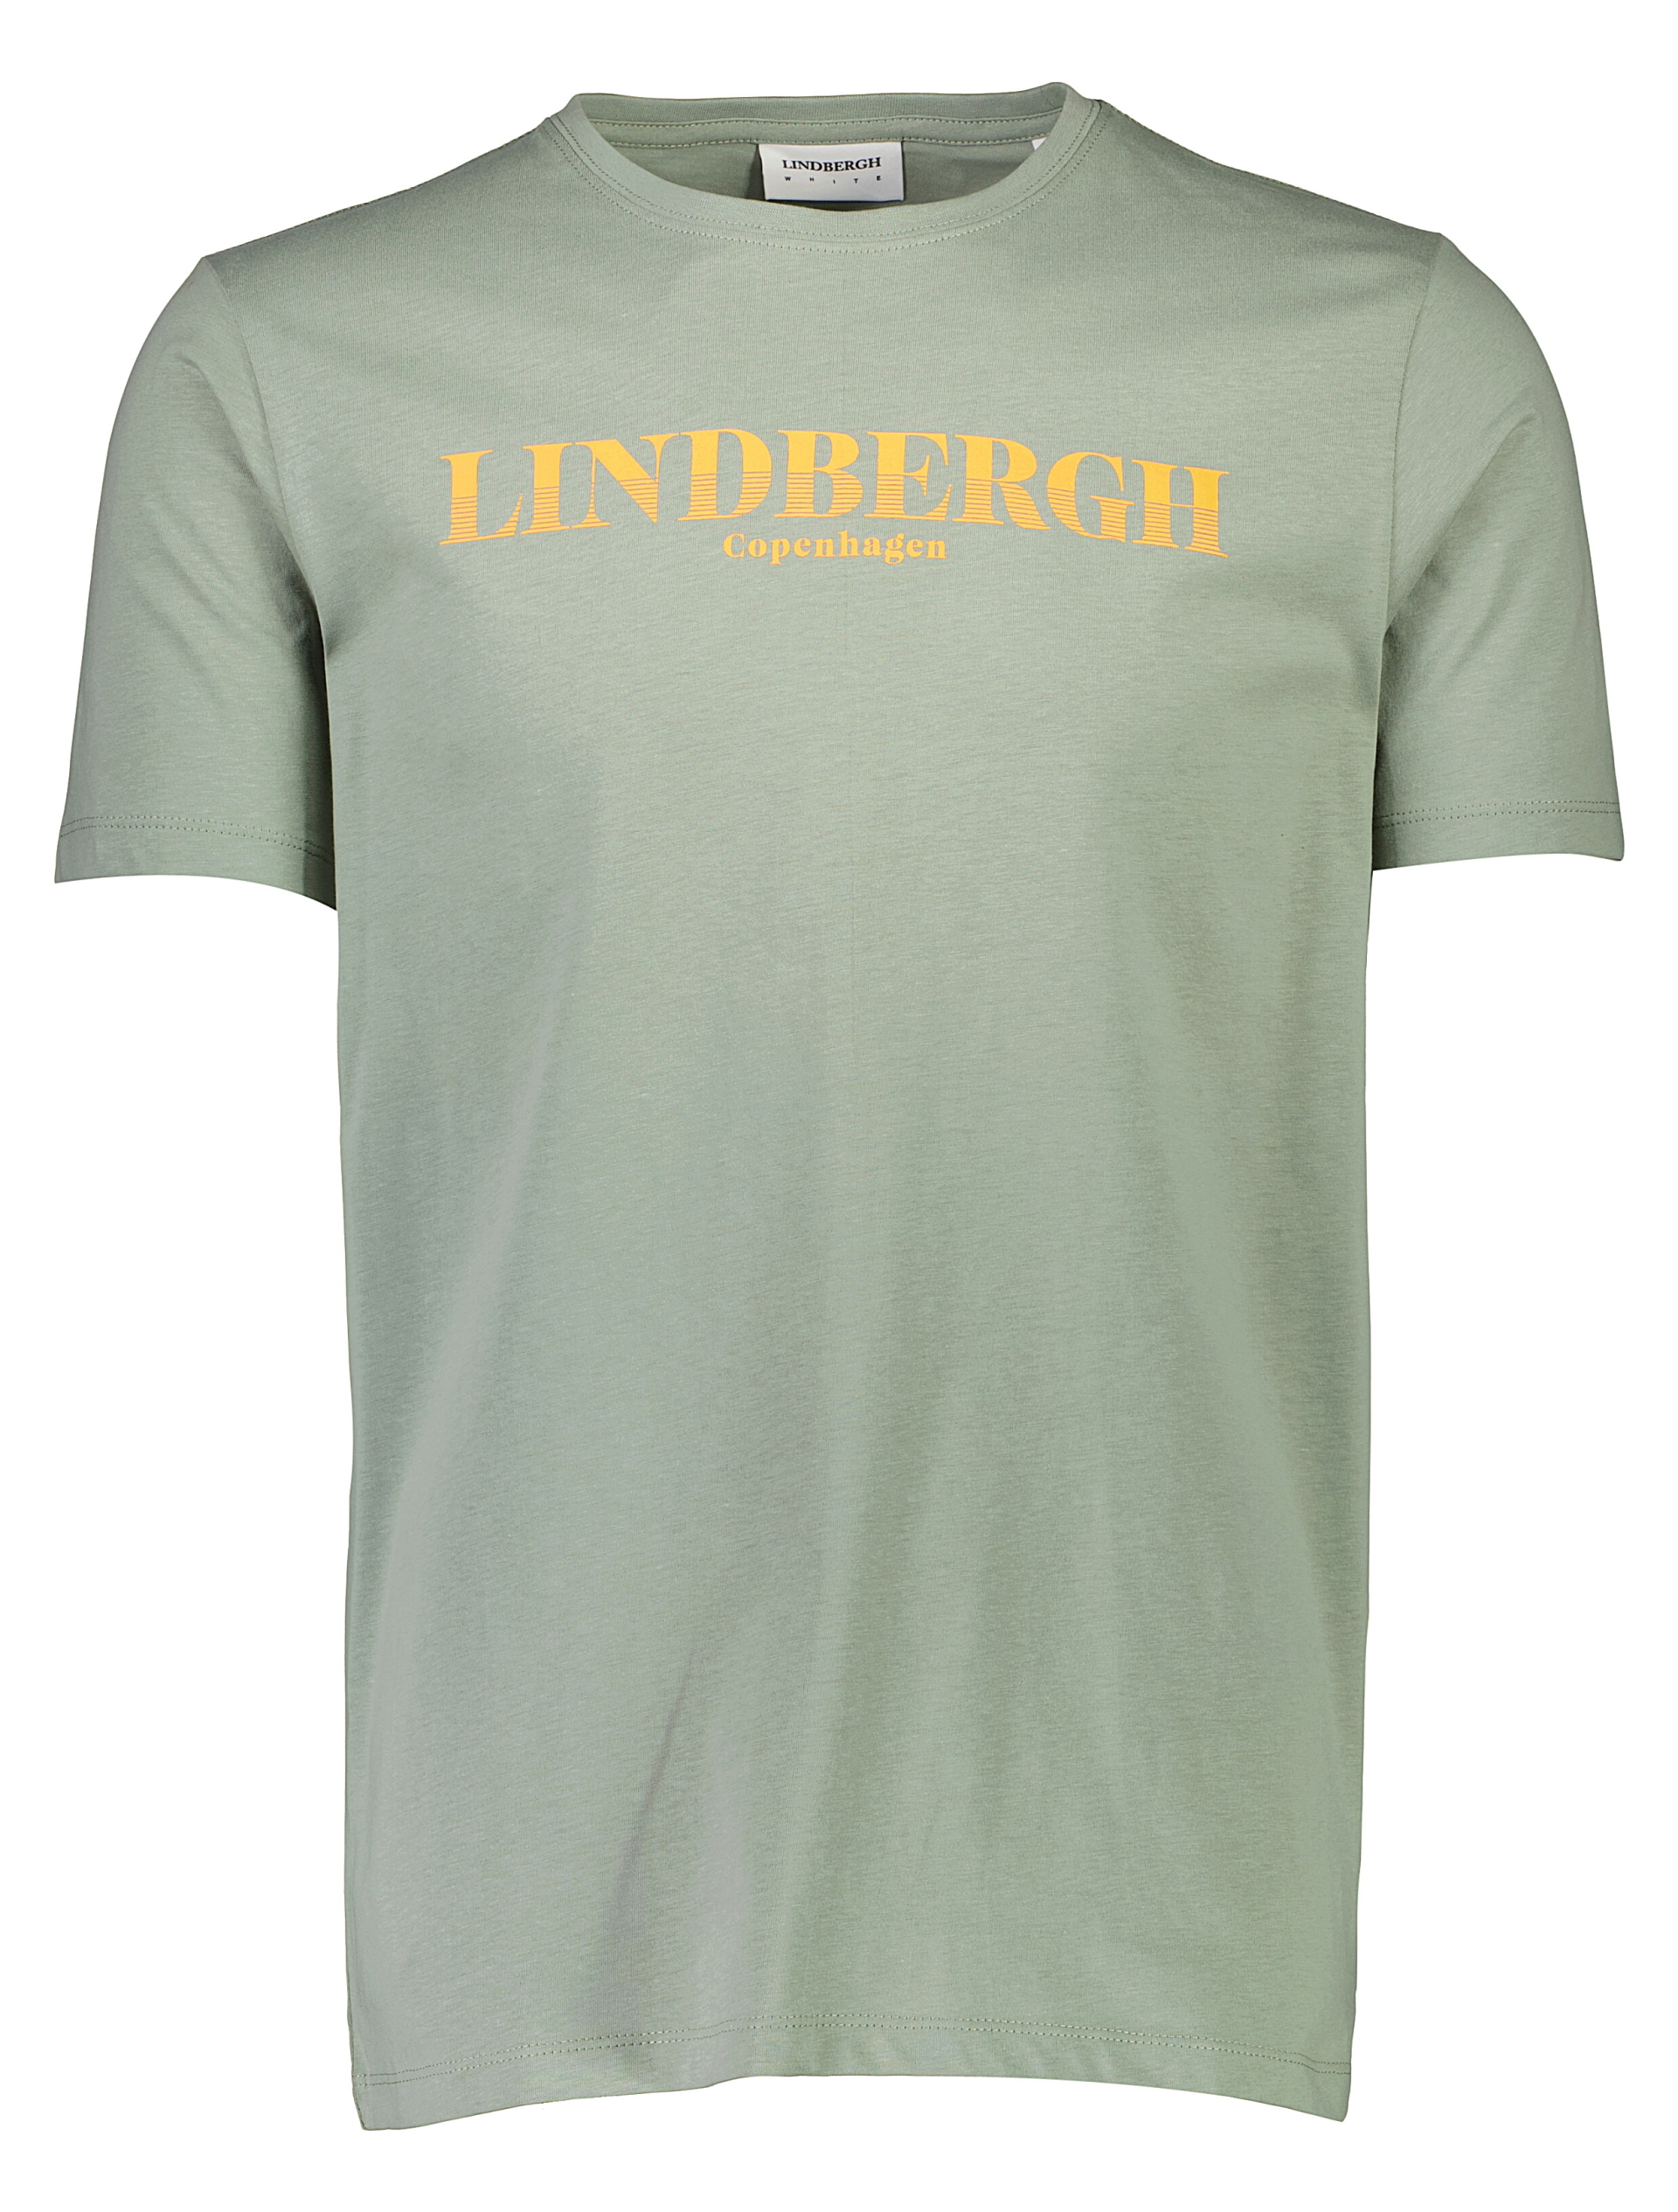 Lindbergh Tee green / mint